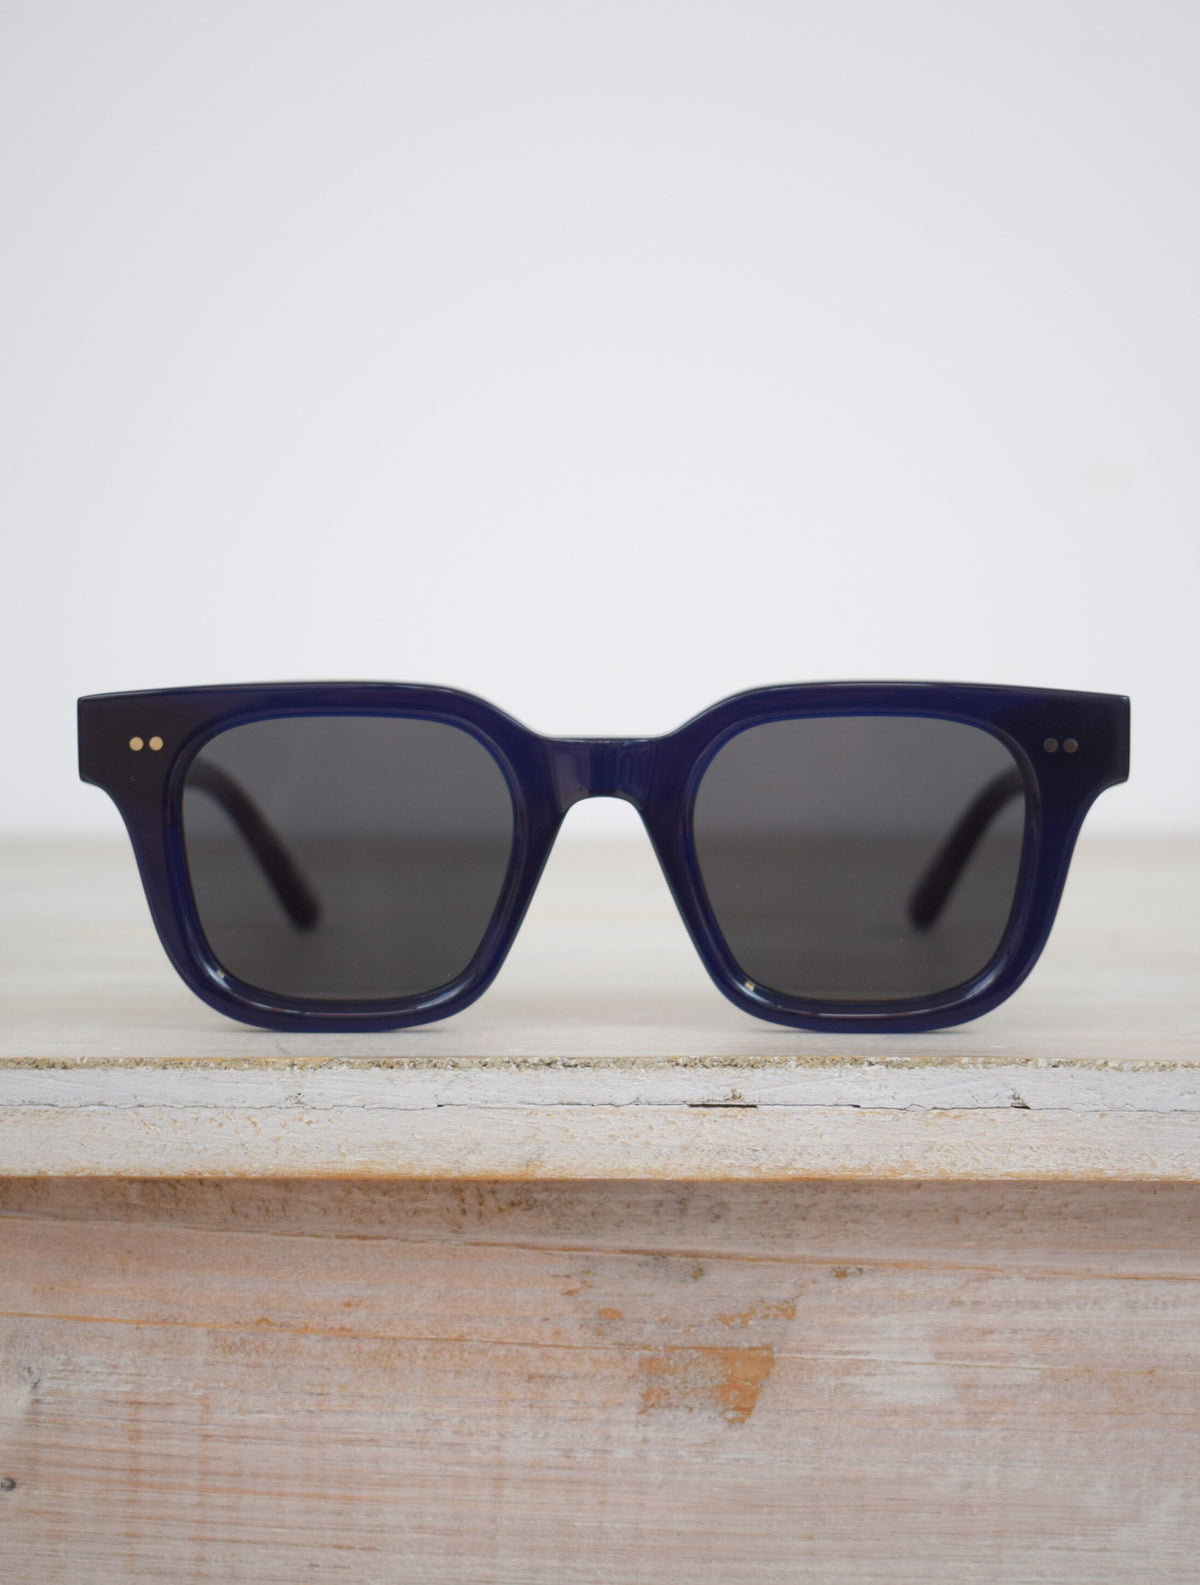  blue sunglasses